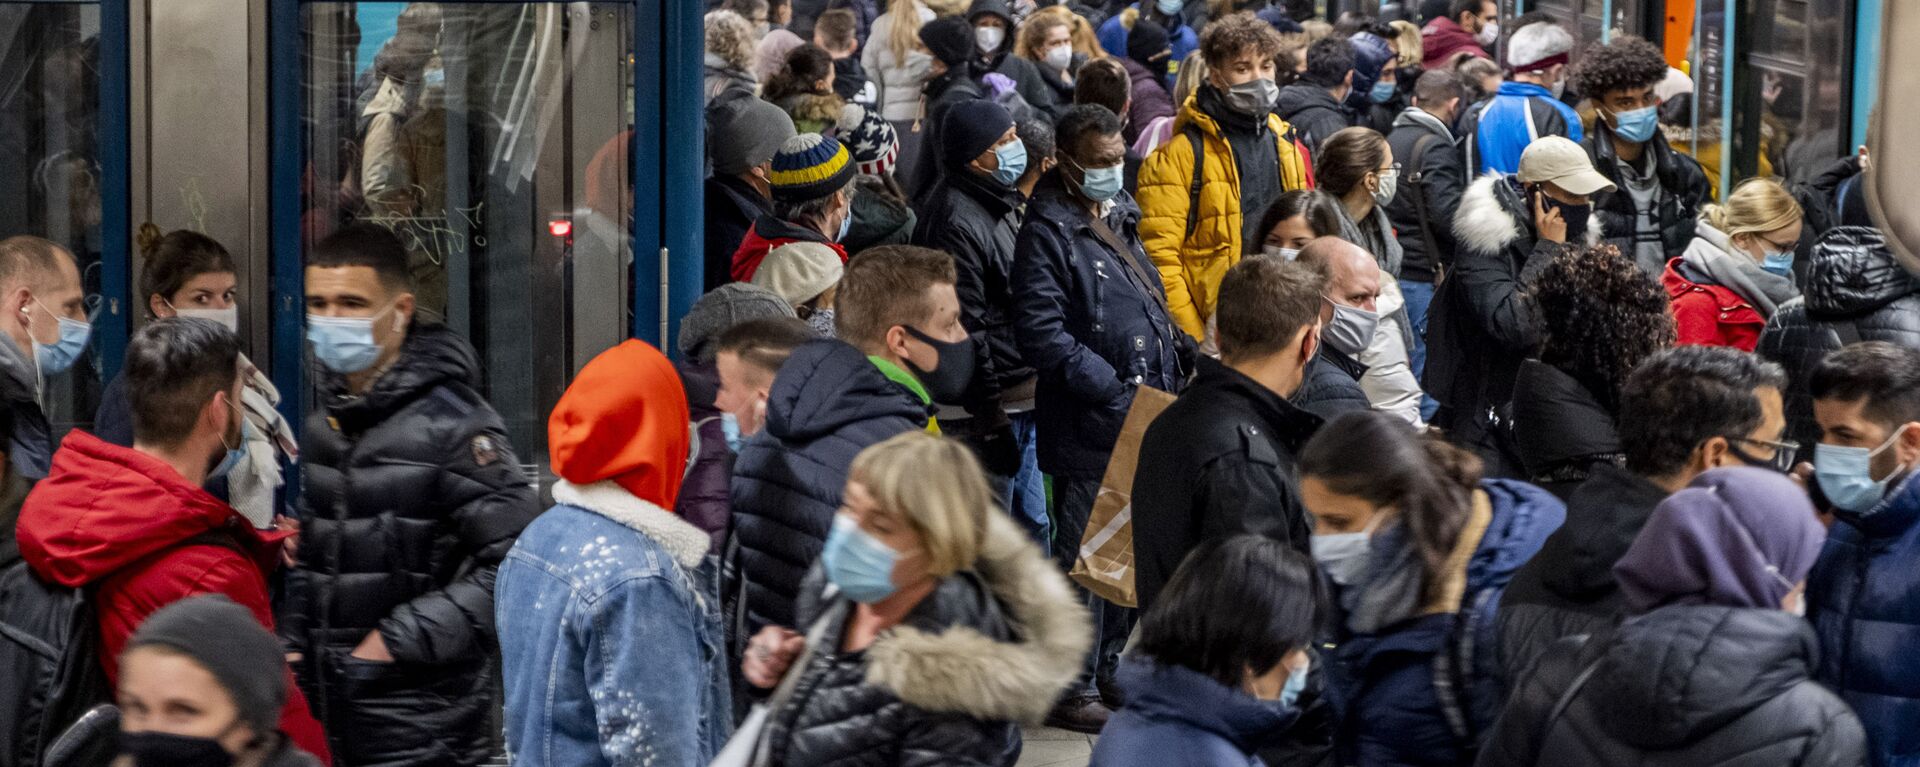 Пандемия коронавируса COVID 19 - пассажиры в метро, Франкфурт Германия - Sputnik Грузия, 1920, 27.11.2021